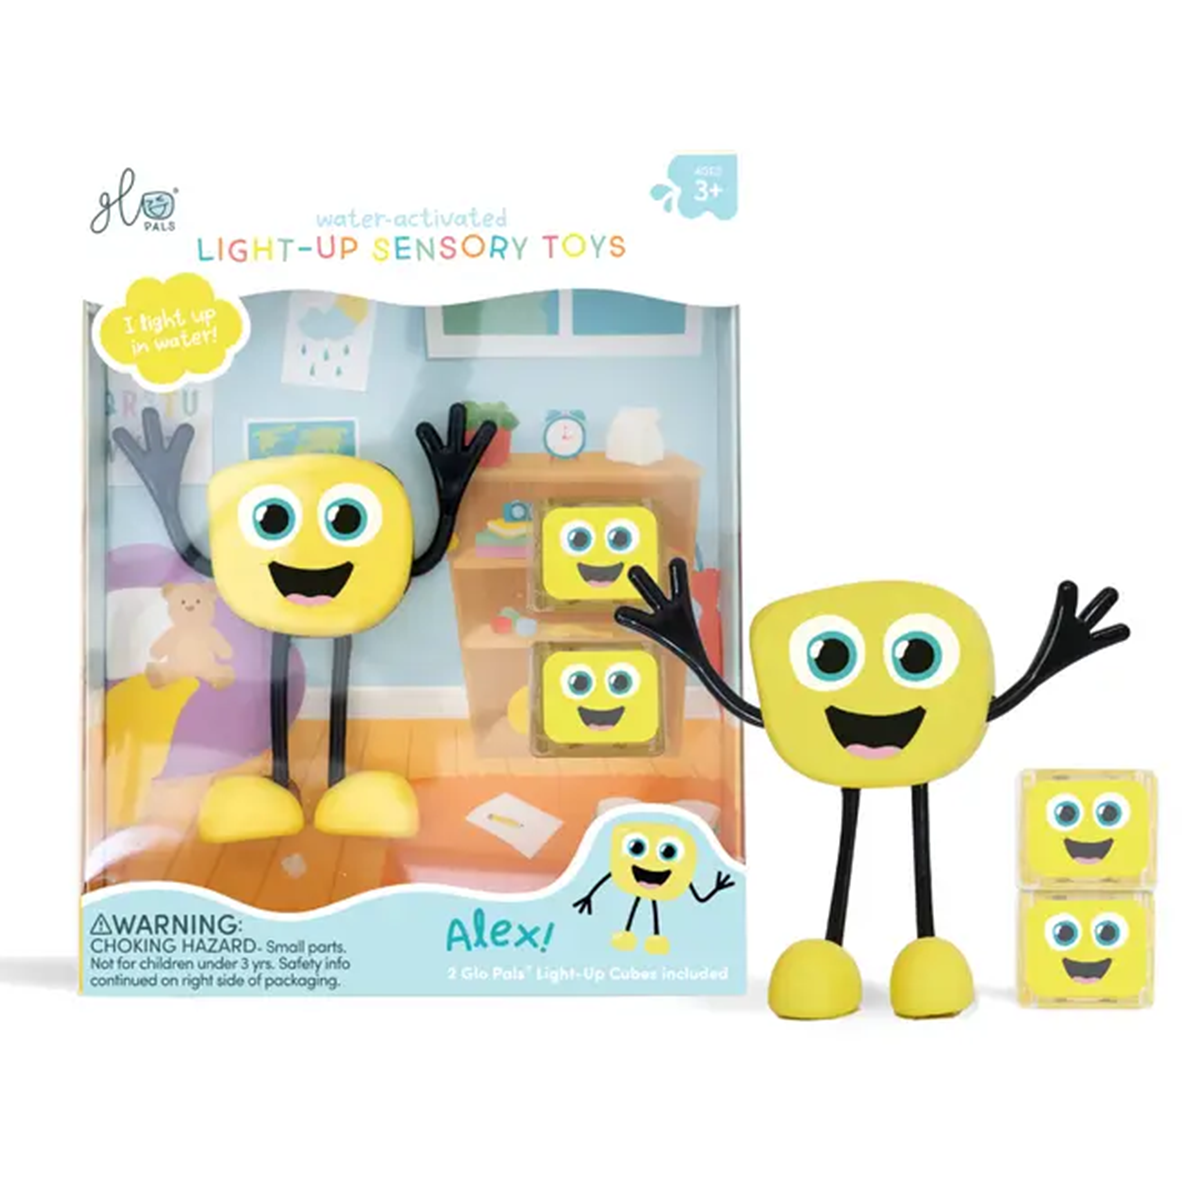 Glo Pals Alex Yellow Light Up Sensory Bath Toy